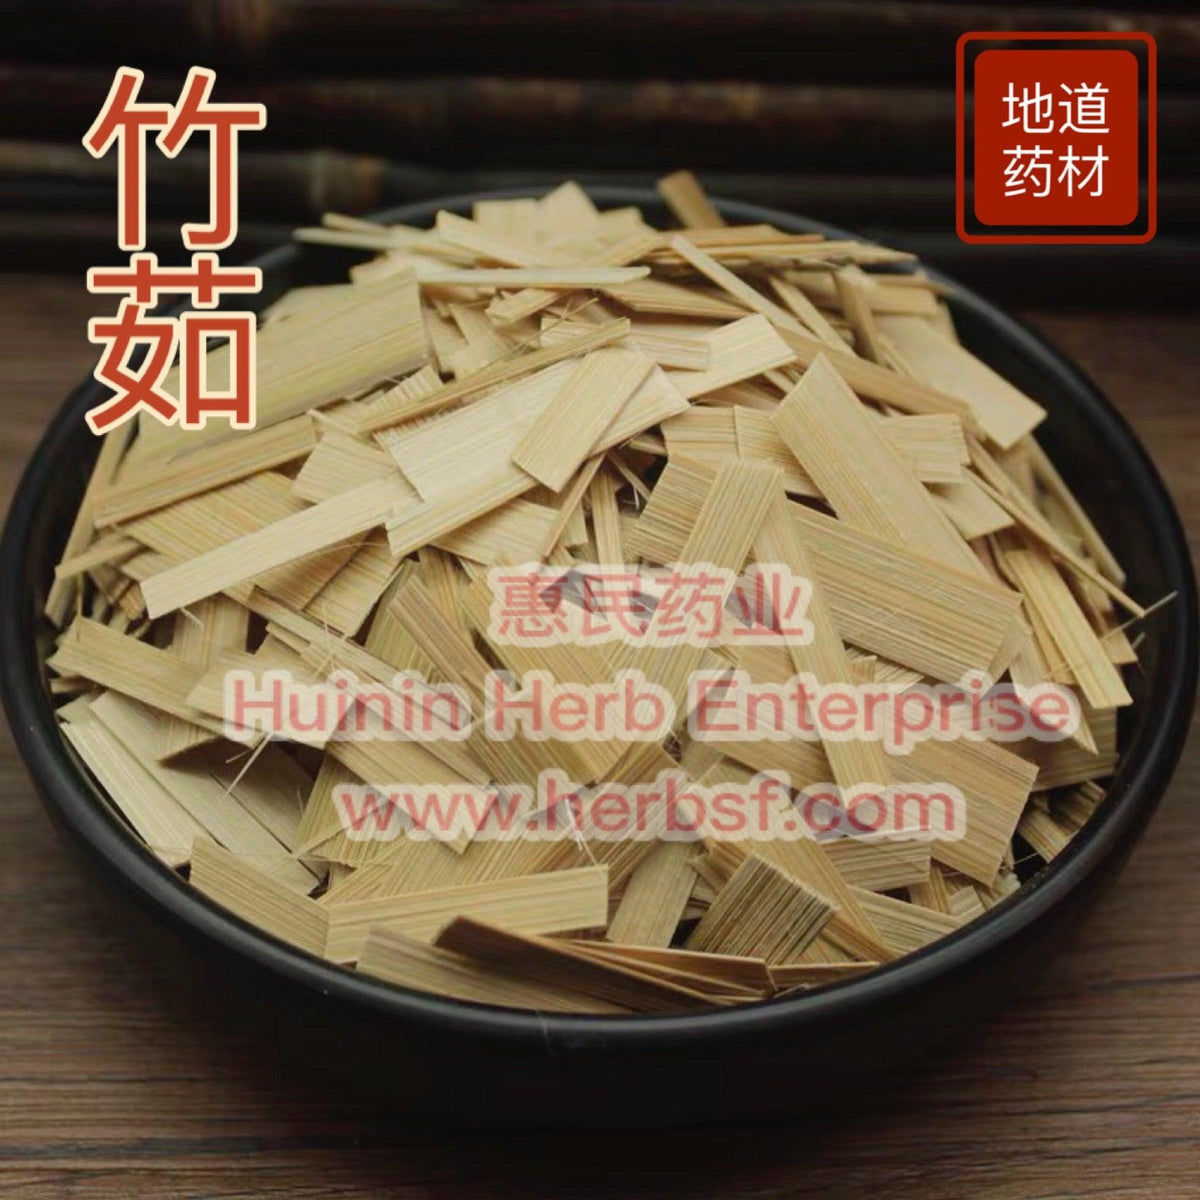 Zhu Ru 4oz - Huimin Herb Online, LLC